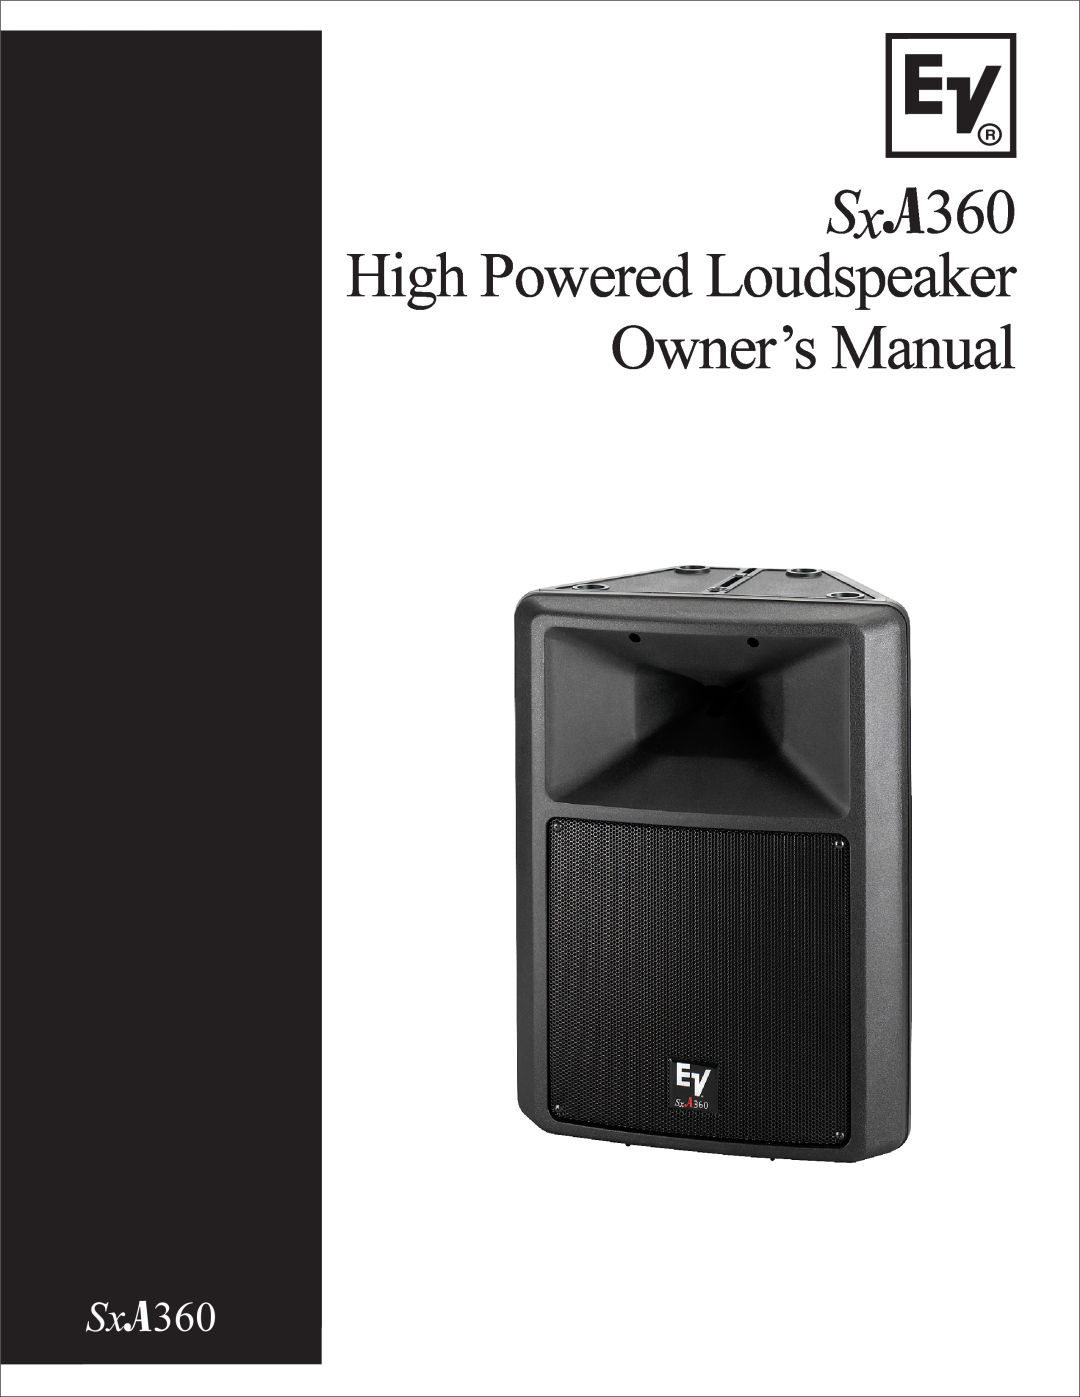 Electro-Voice manual SxA360 High Powered Loudspeaker 